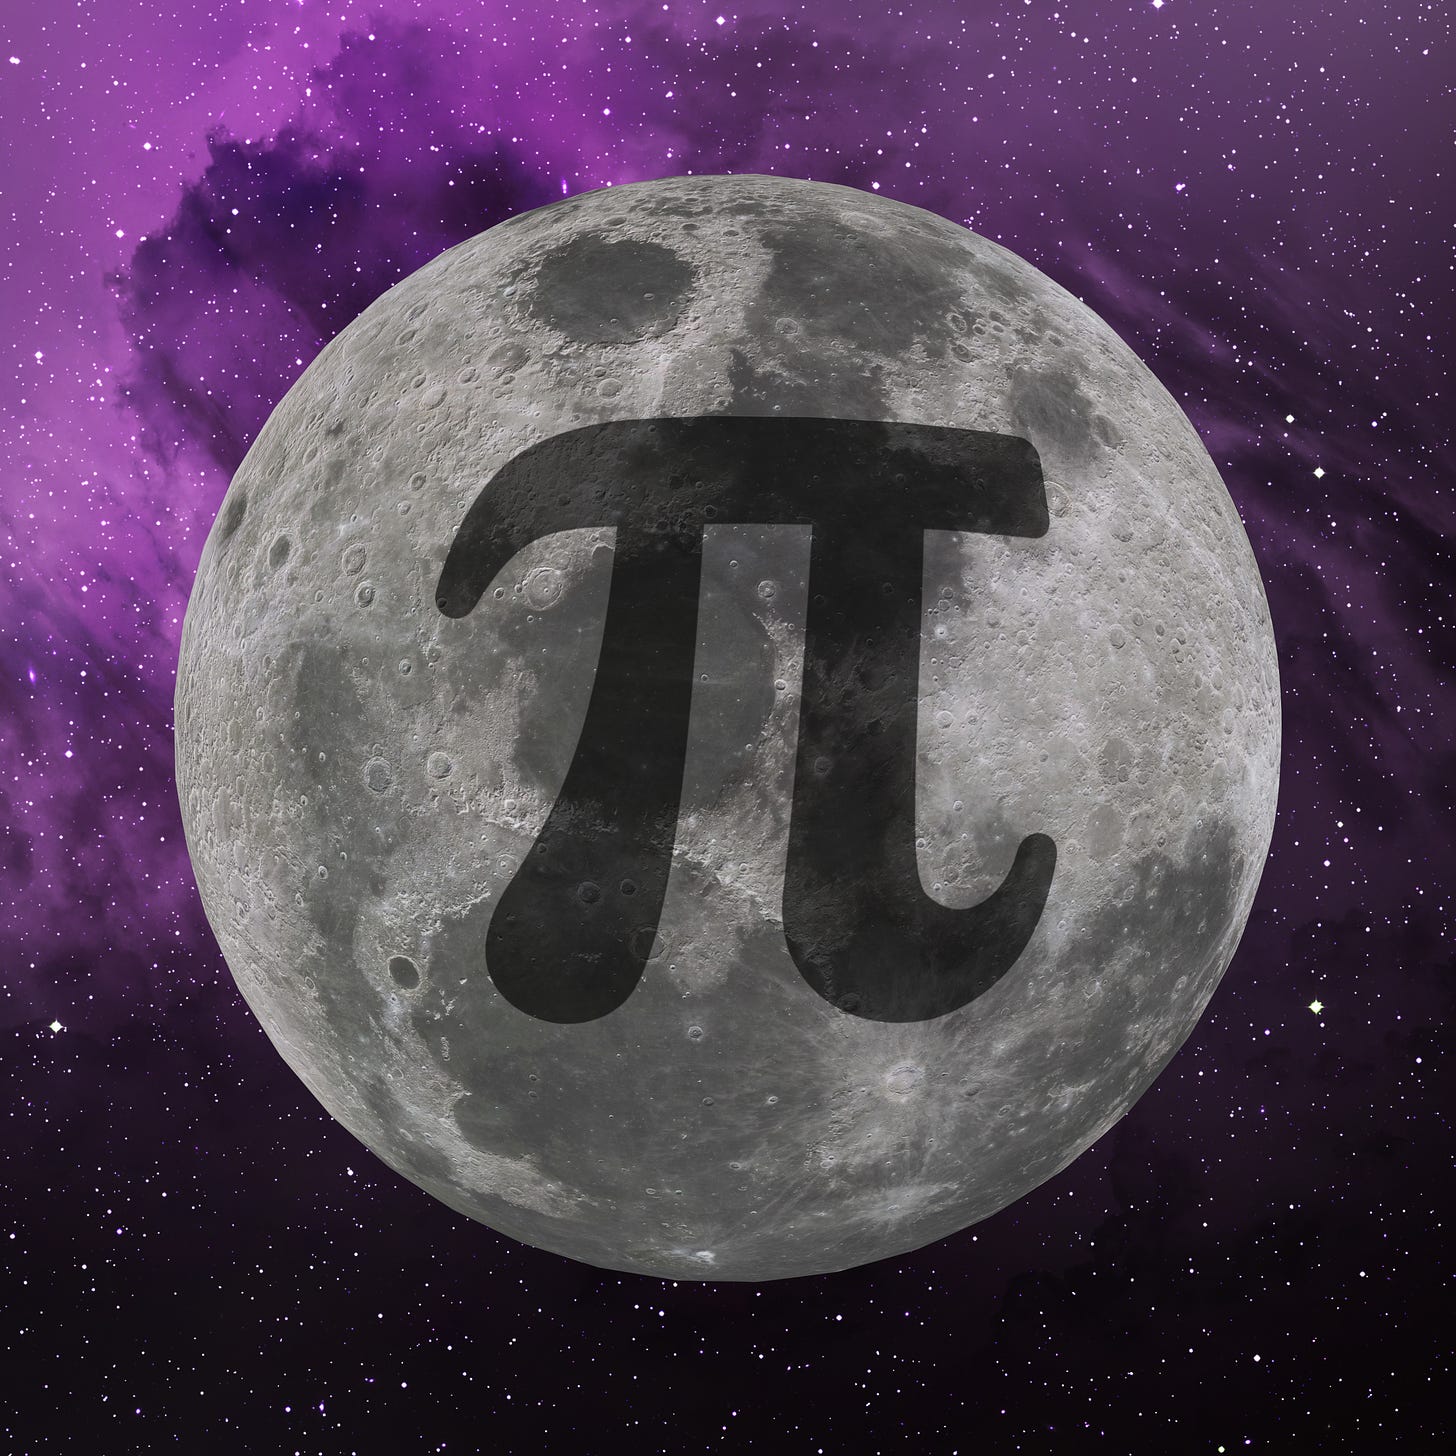 Pi symbol on the moon